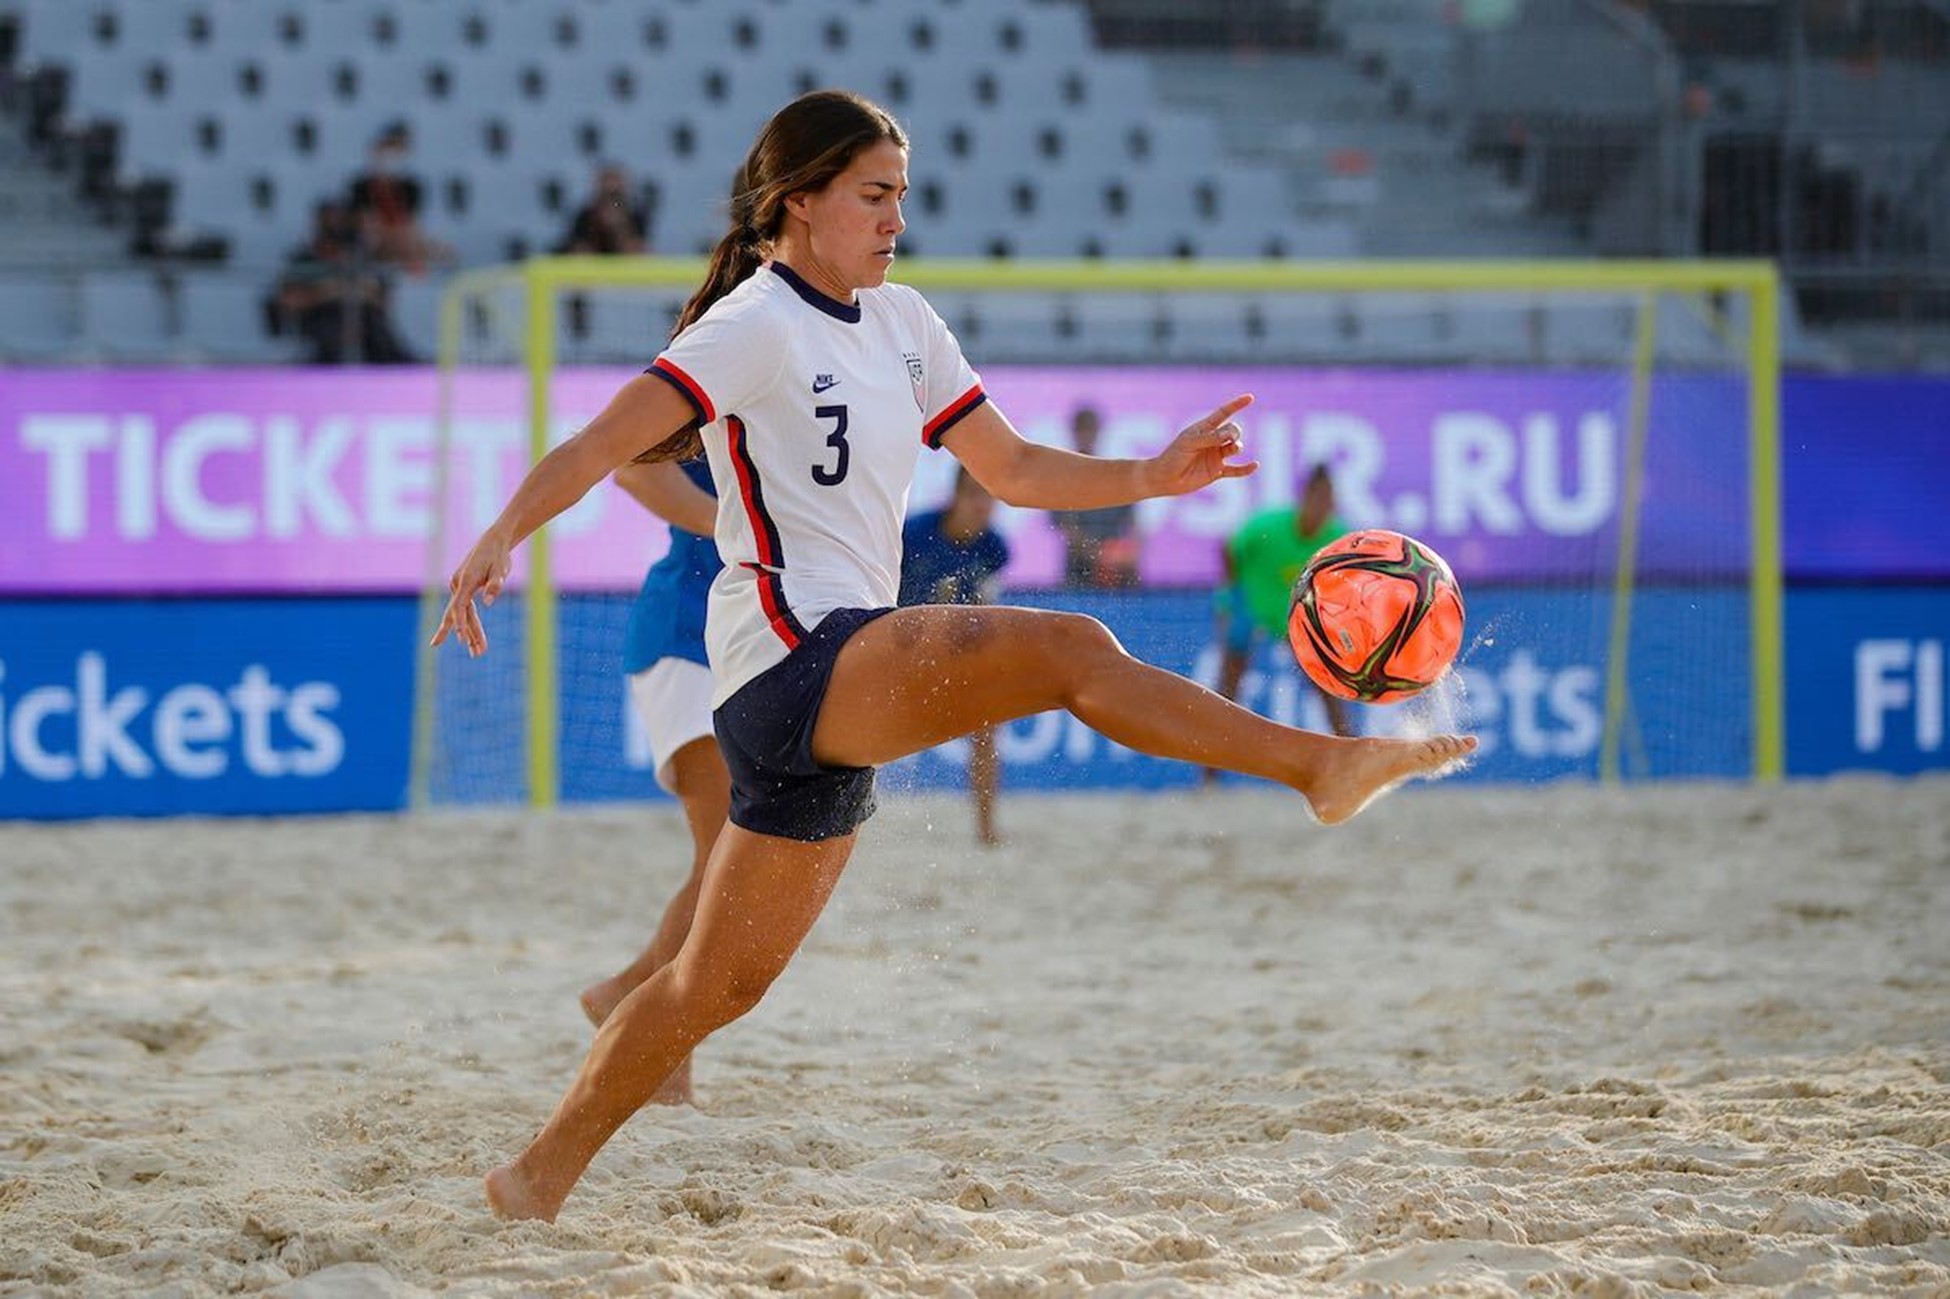 U S Womens Beach Soccer National Team Hold An 18 Player Training Camp